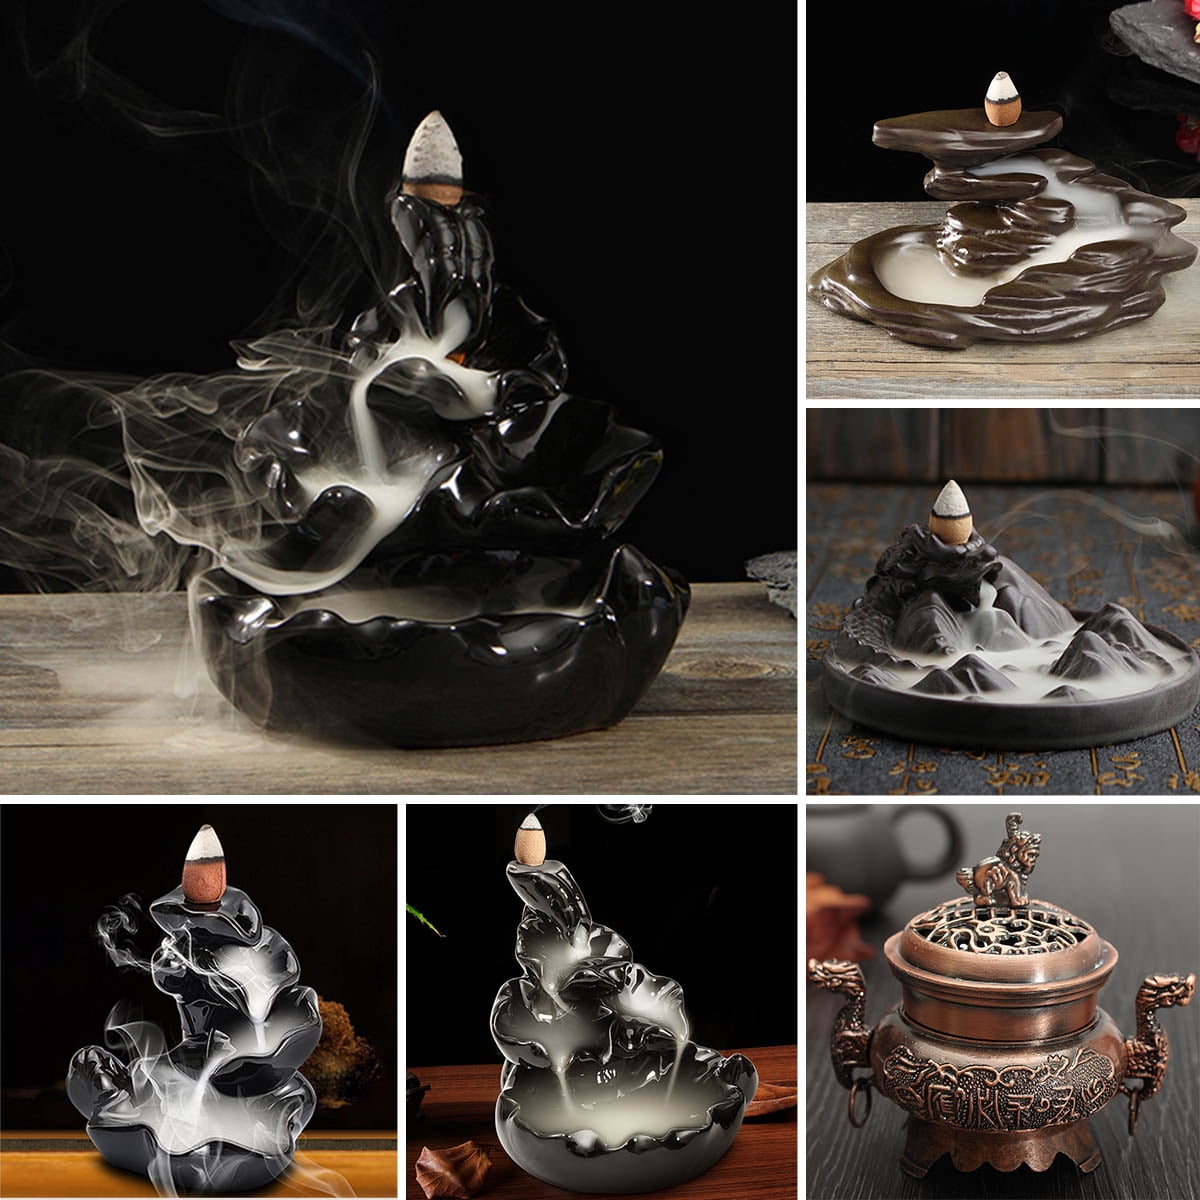 Details about   Handmade Incense Cone Back-flow Burner Creative Yoga Landscape Home Decorations 